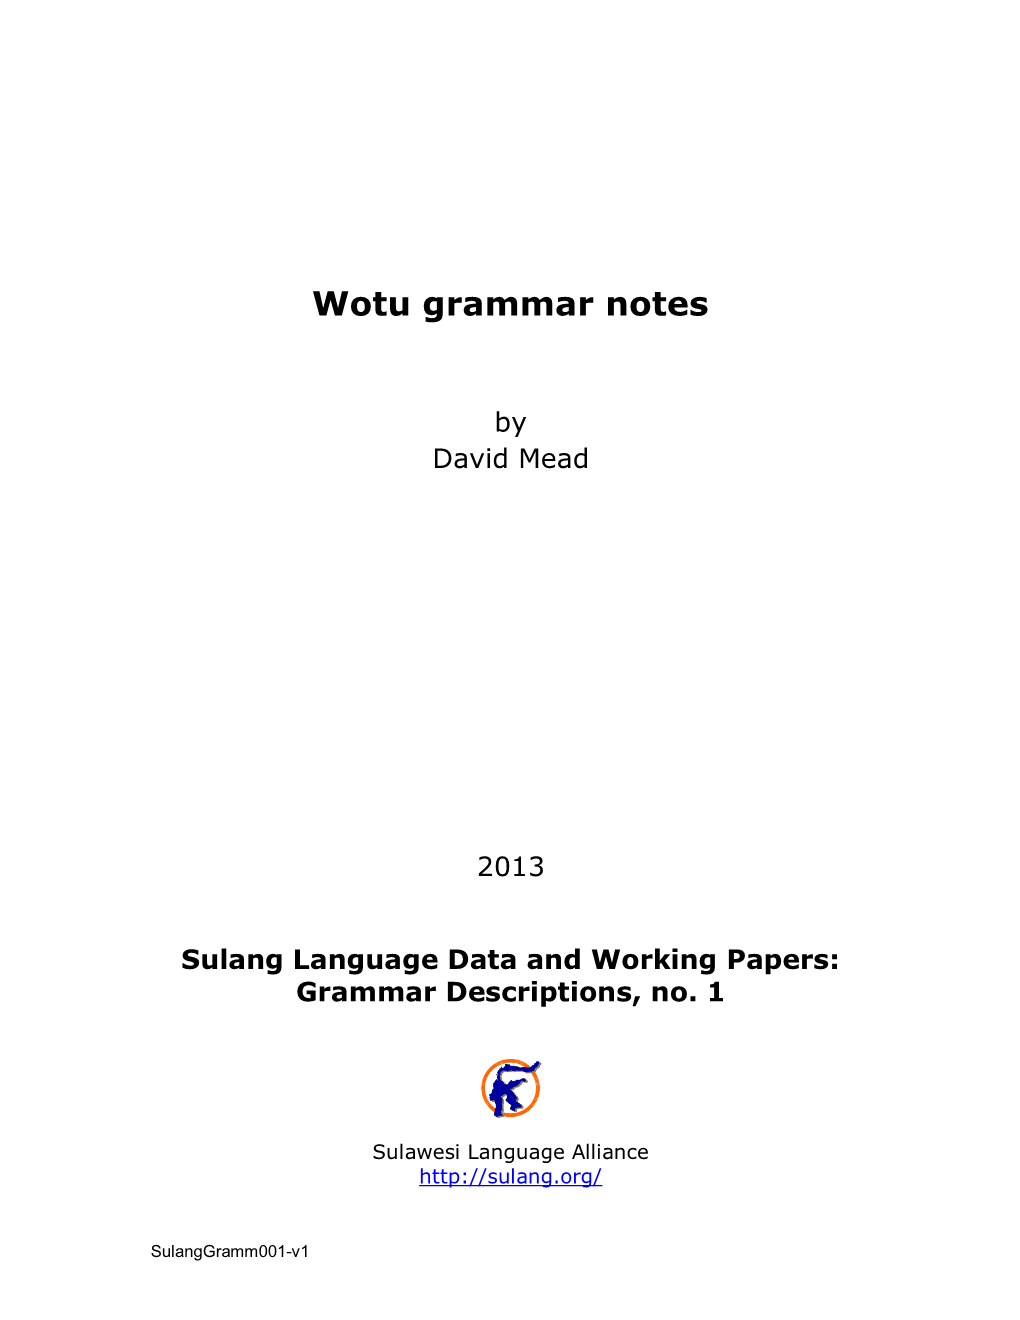 Wotu Grammar Notes